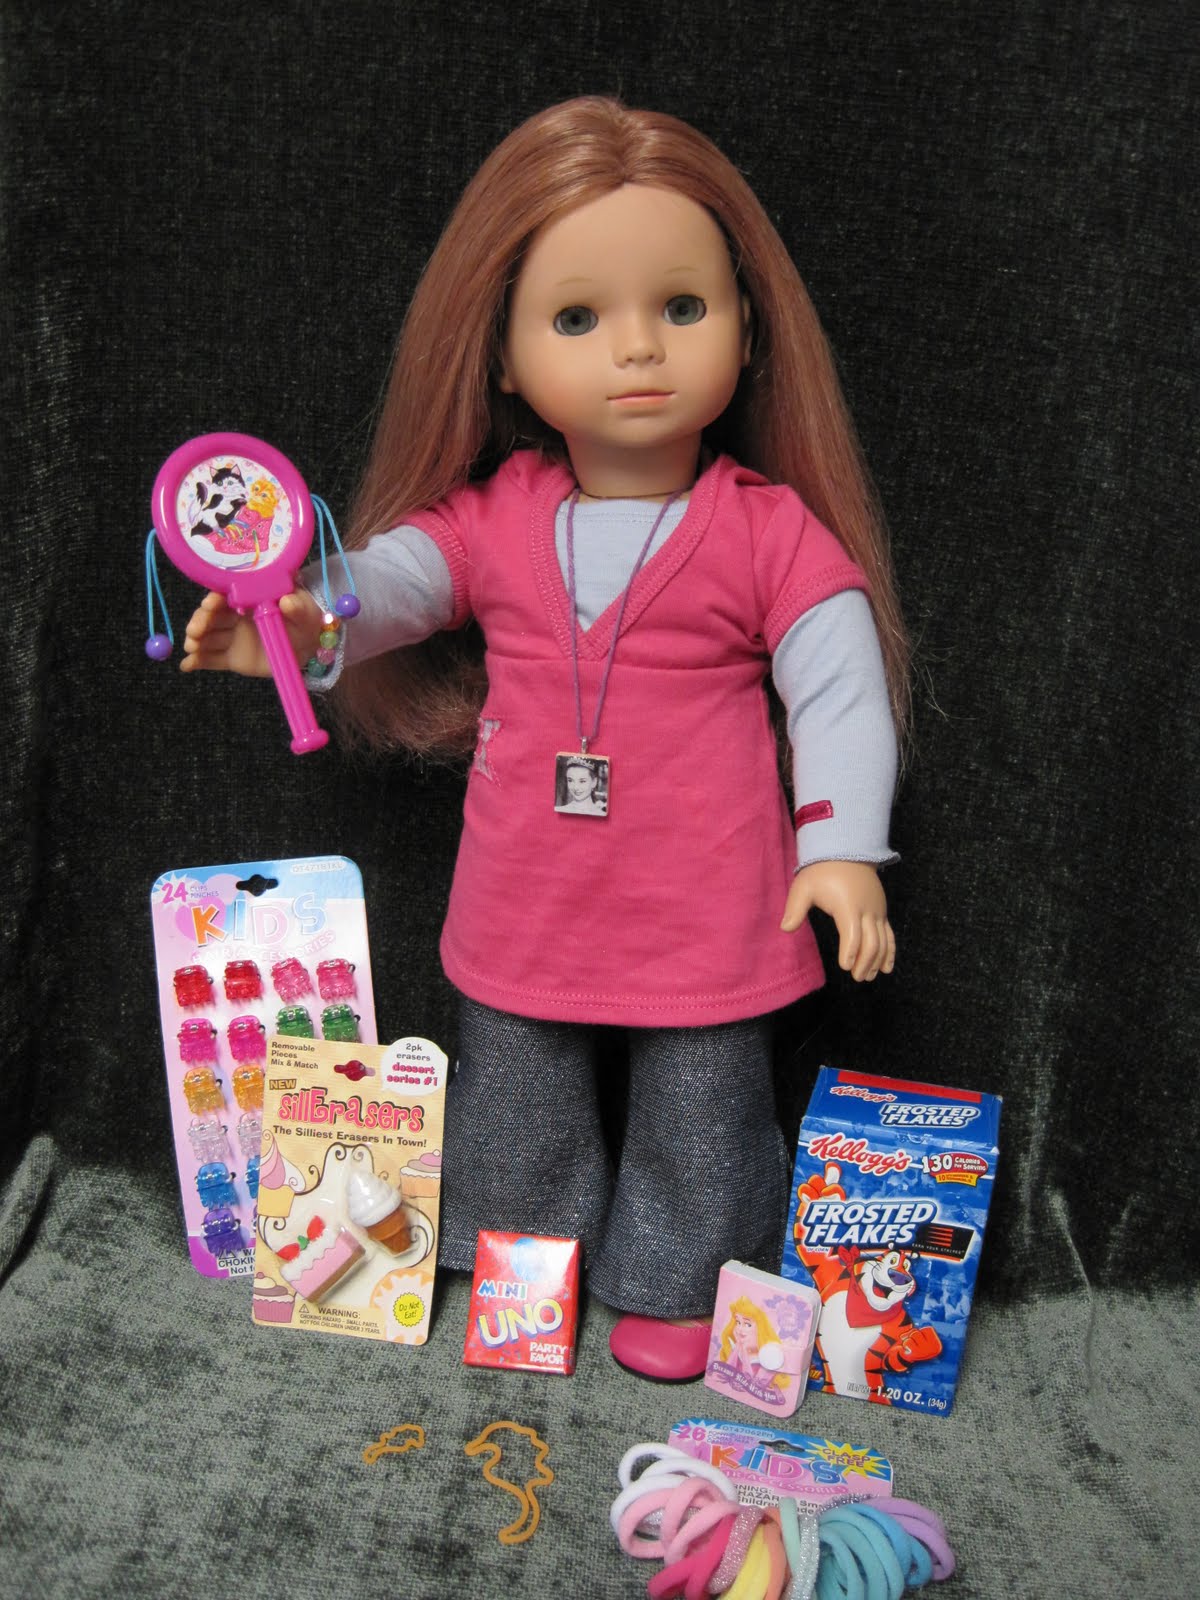 Barbie Sillybandz - Buy Official Sillybandz Online Now